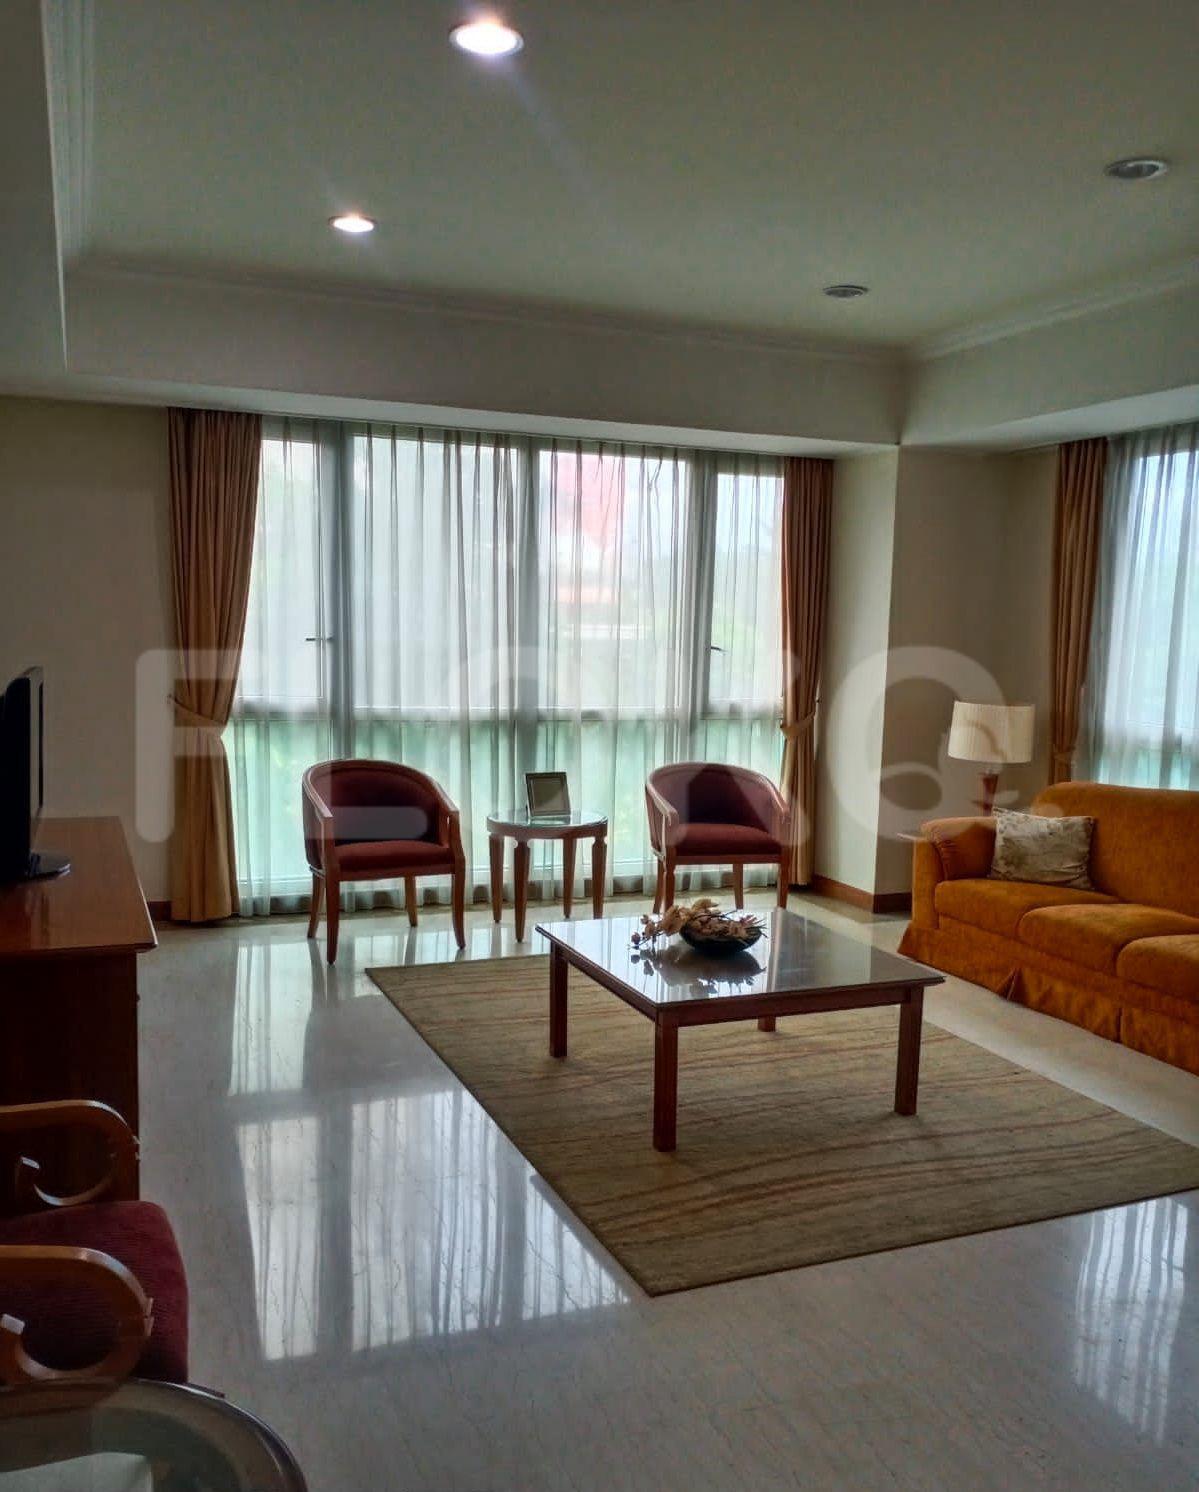 3 Bedroom on 2nd Floor fte11b for Rent in Casablanca Apartment